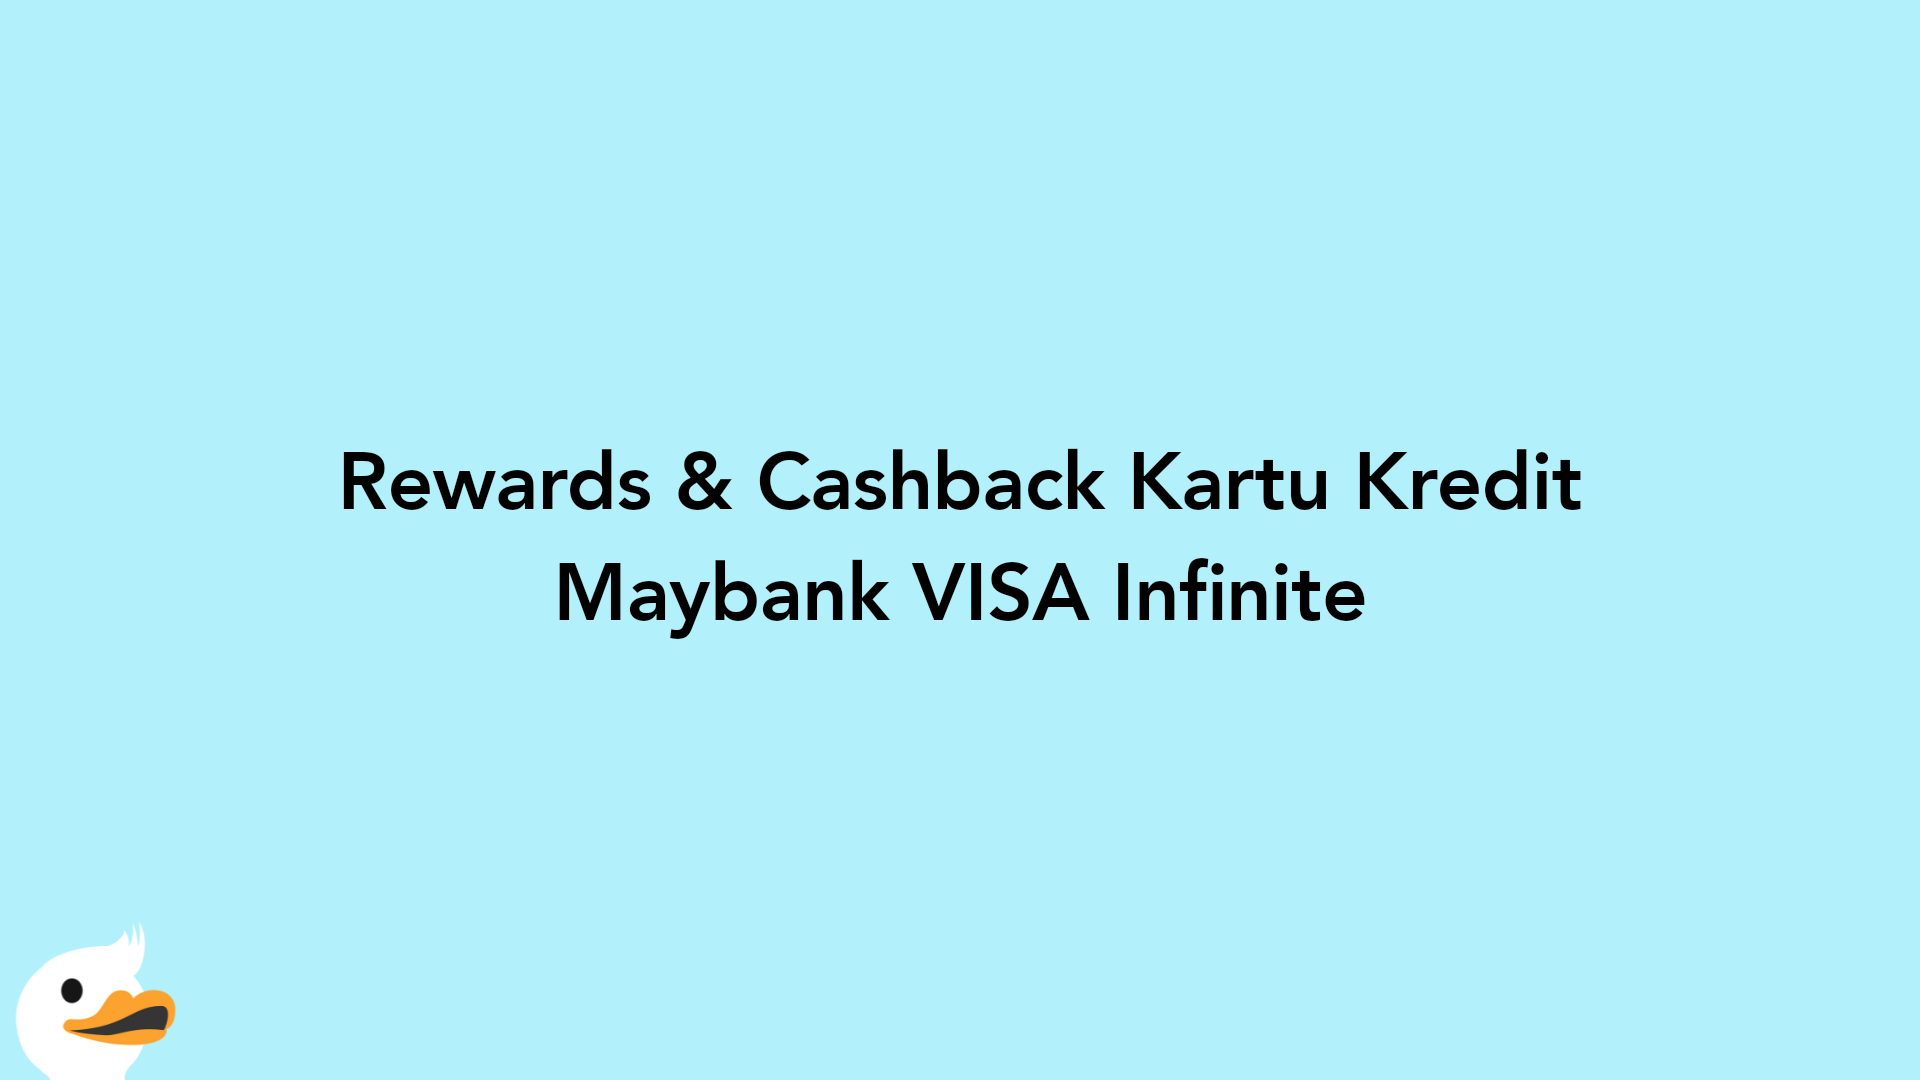 Rewards & Cashback Kartu Kredit Maybank VISA Infinite